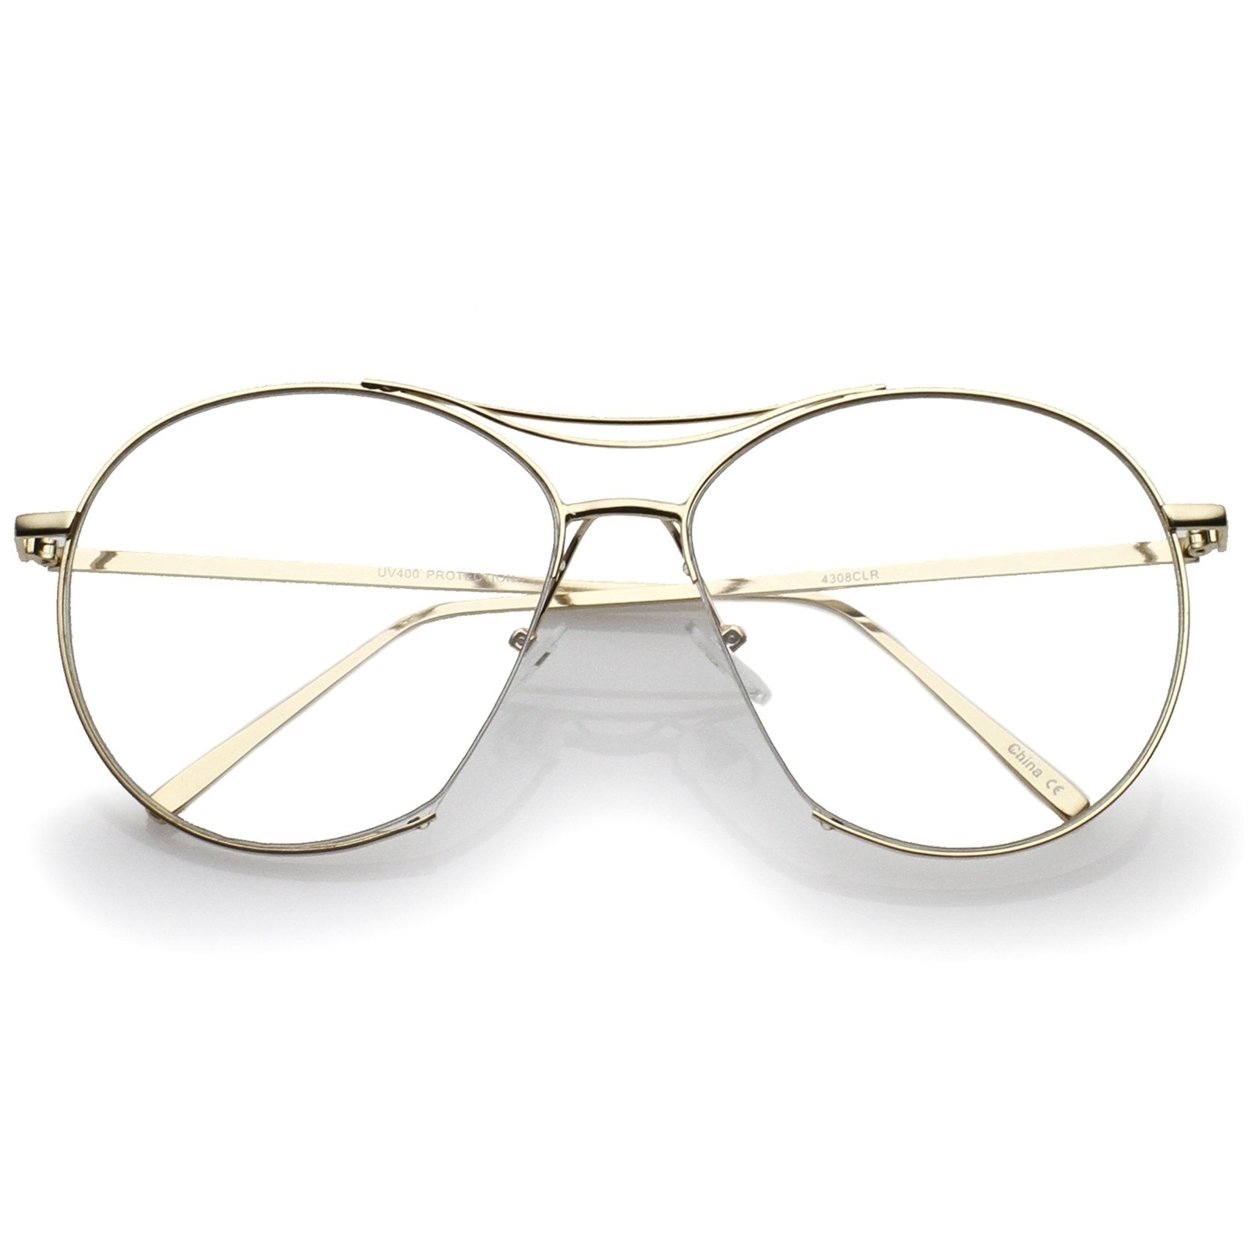 Oversize Semi-Rimless Brow Bar Round Clear Flat Lens Aviator Eyeglasses 59mm - Black / Clear